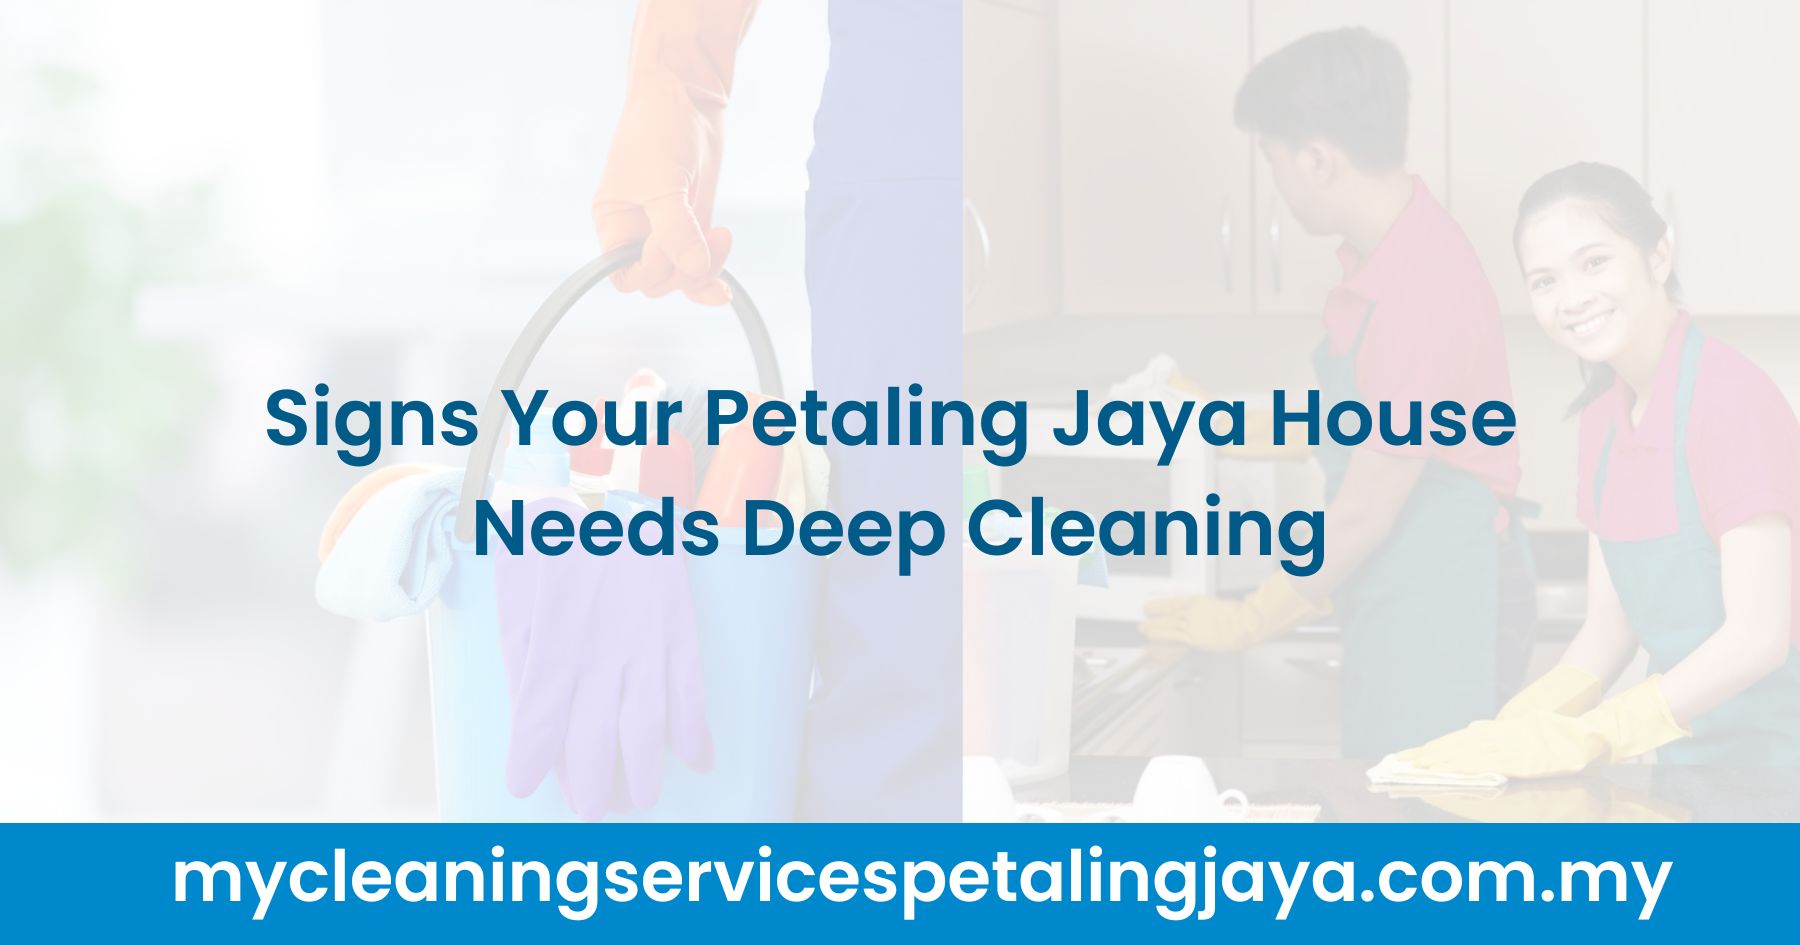 Signs Your Petaling Jaya House Needs Deep Cleaning